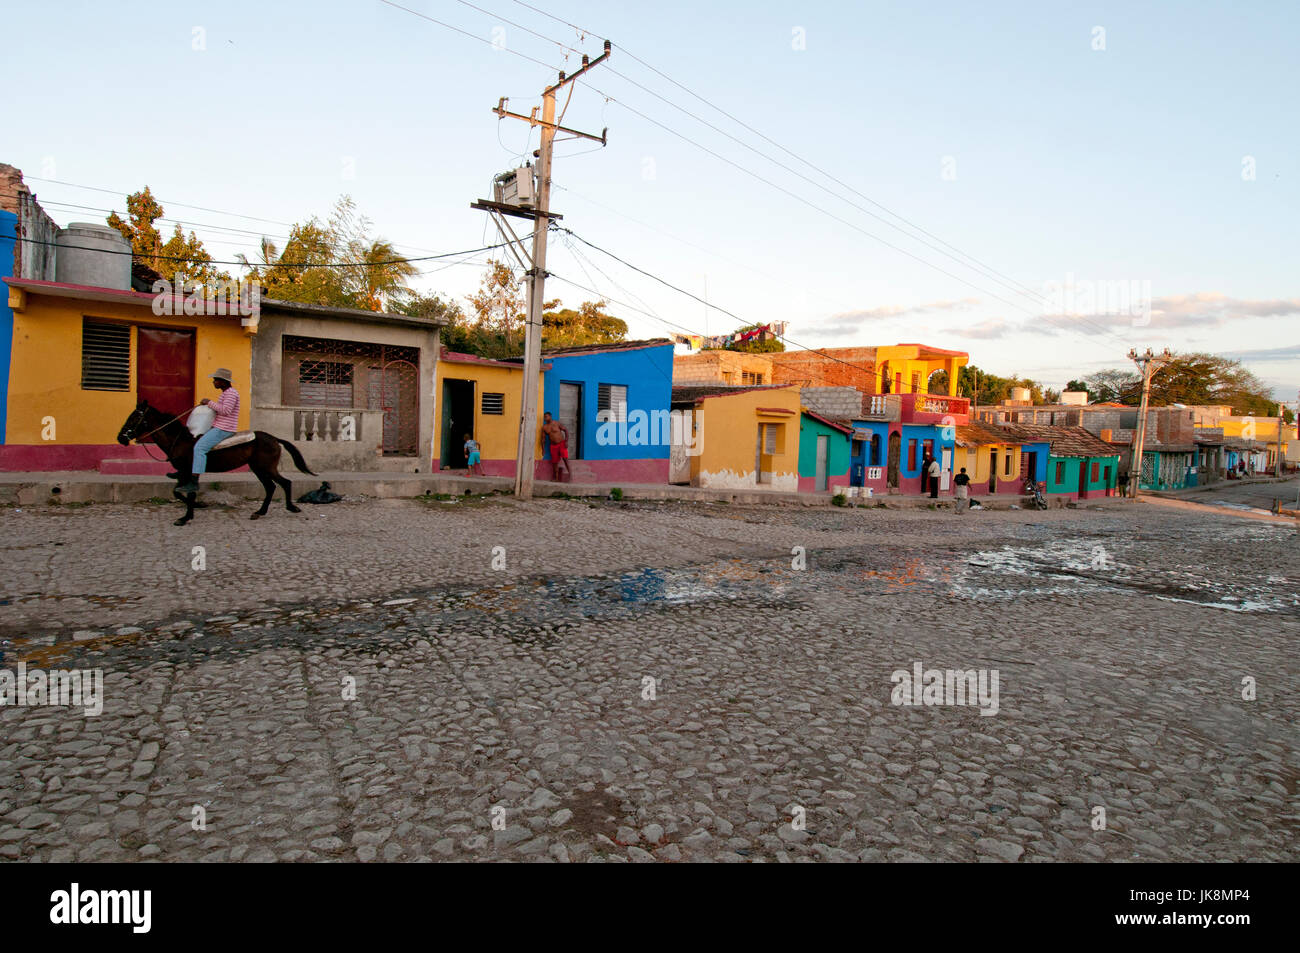 Gepflasterten Seitenstraße in Trinidad Kuba Stockfoto